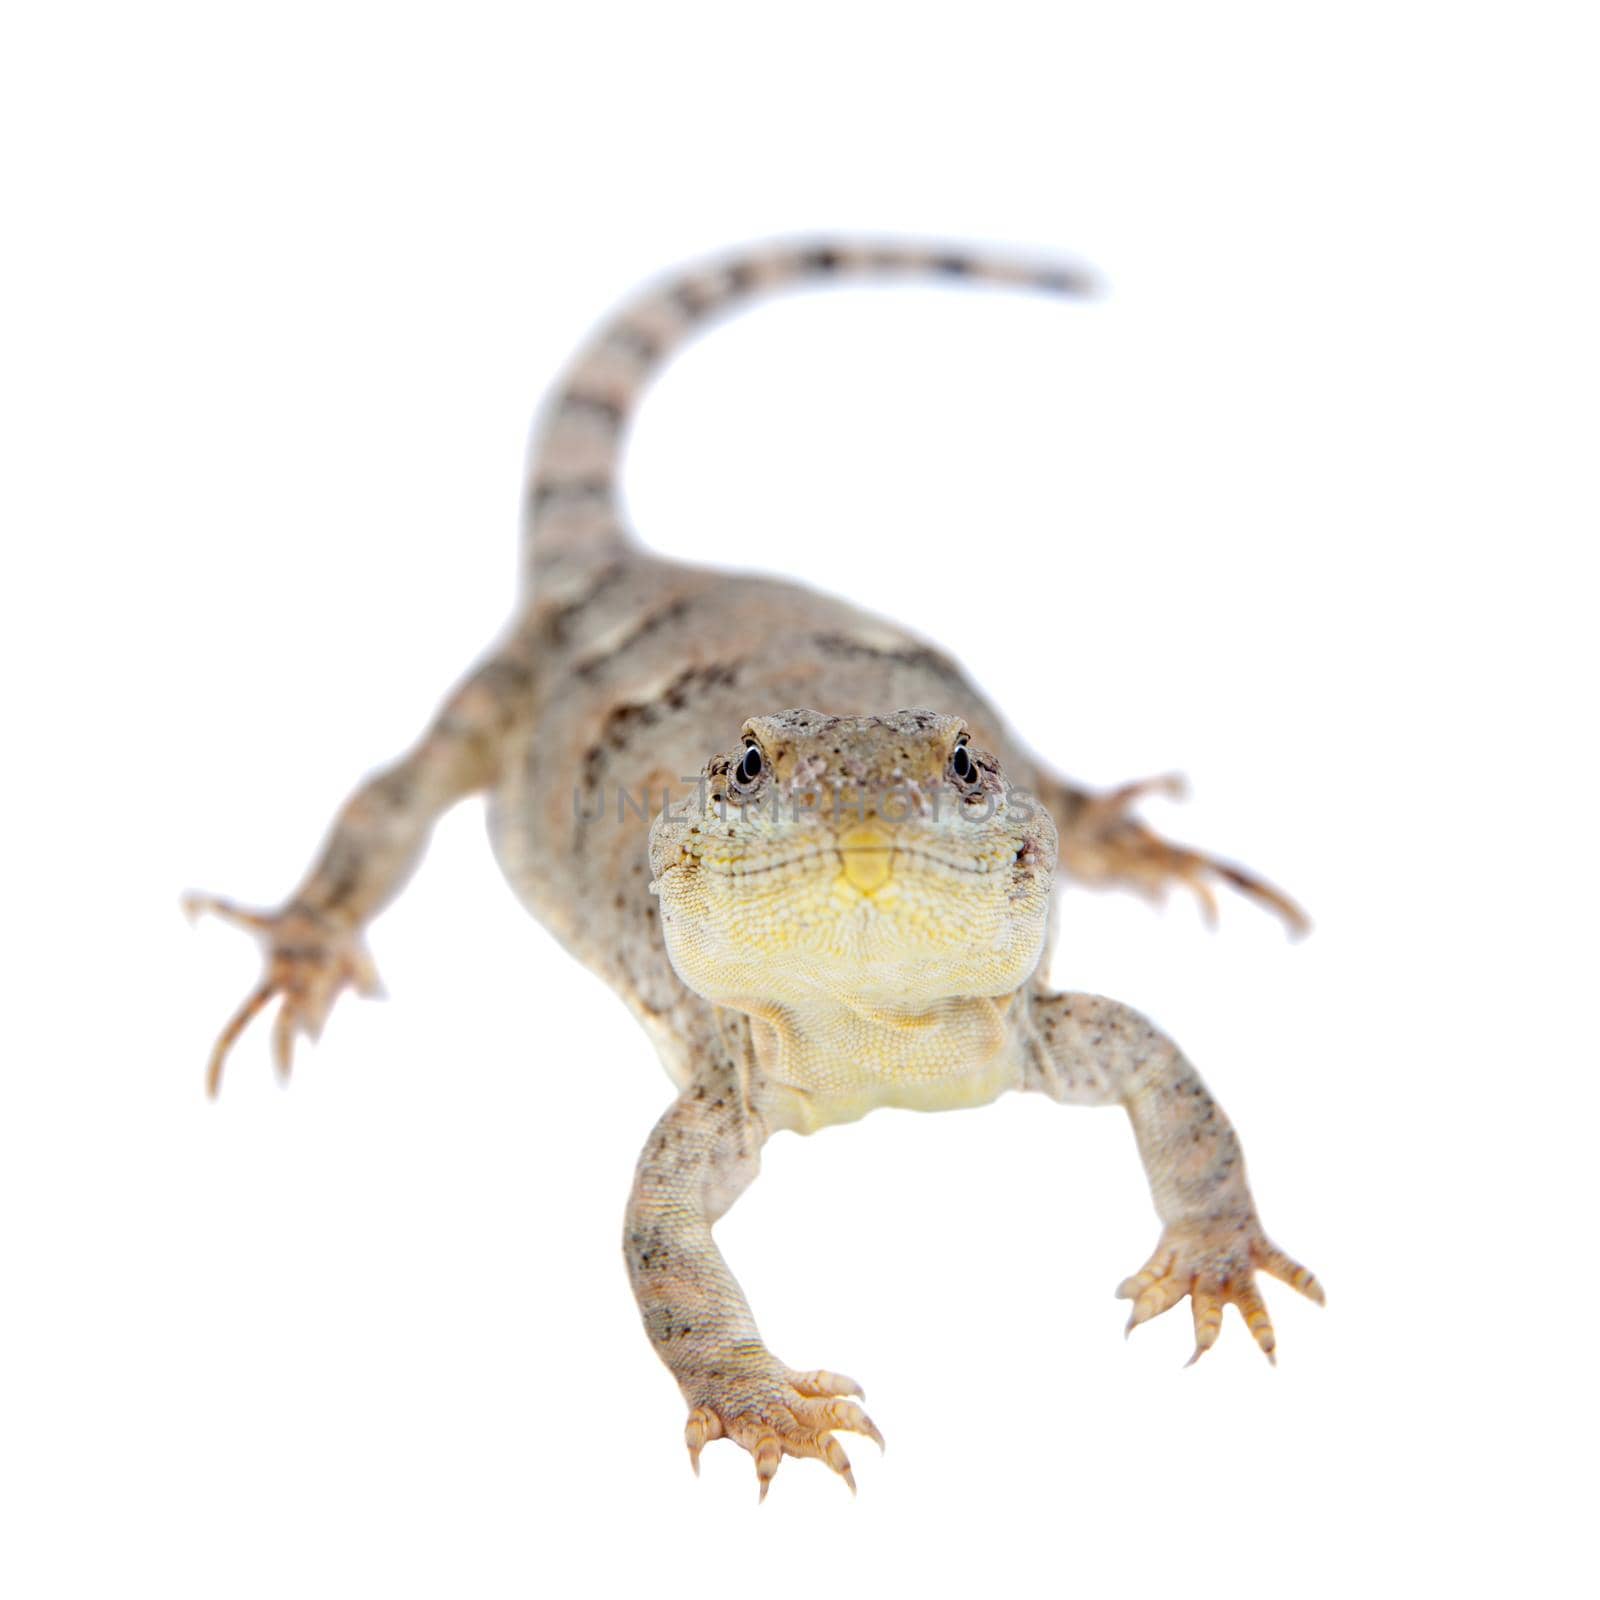 Bibron's iguana or Diplolaemus bibronii on white by RosaJay